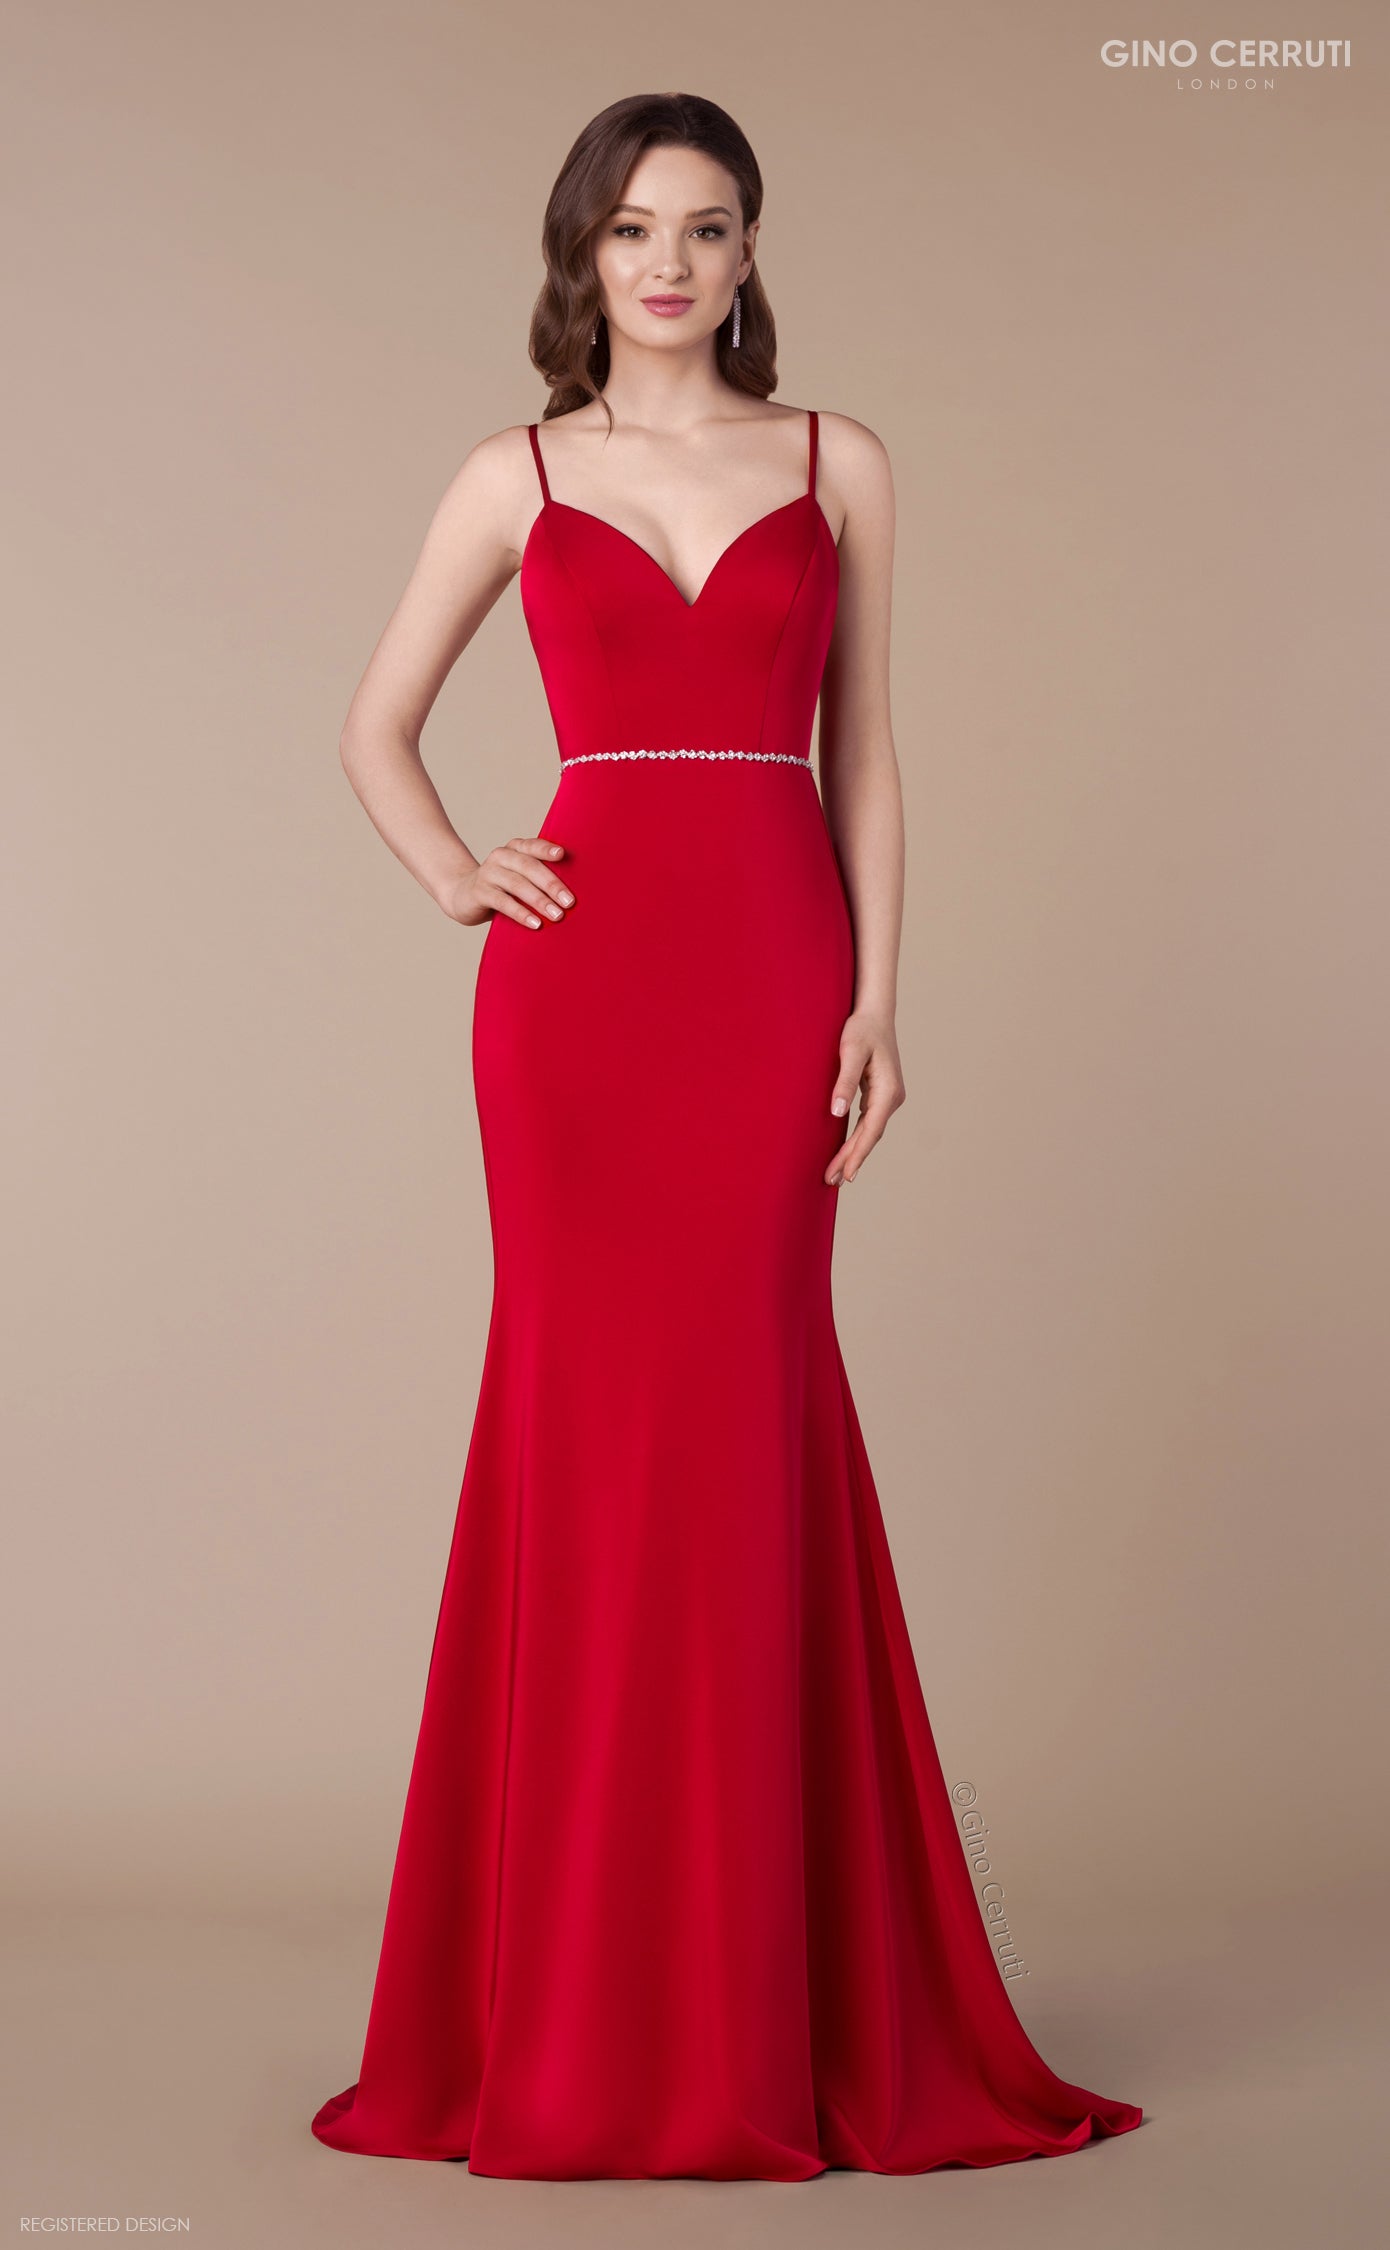 Plain red prom dress